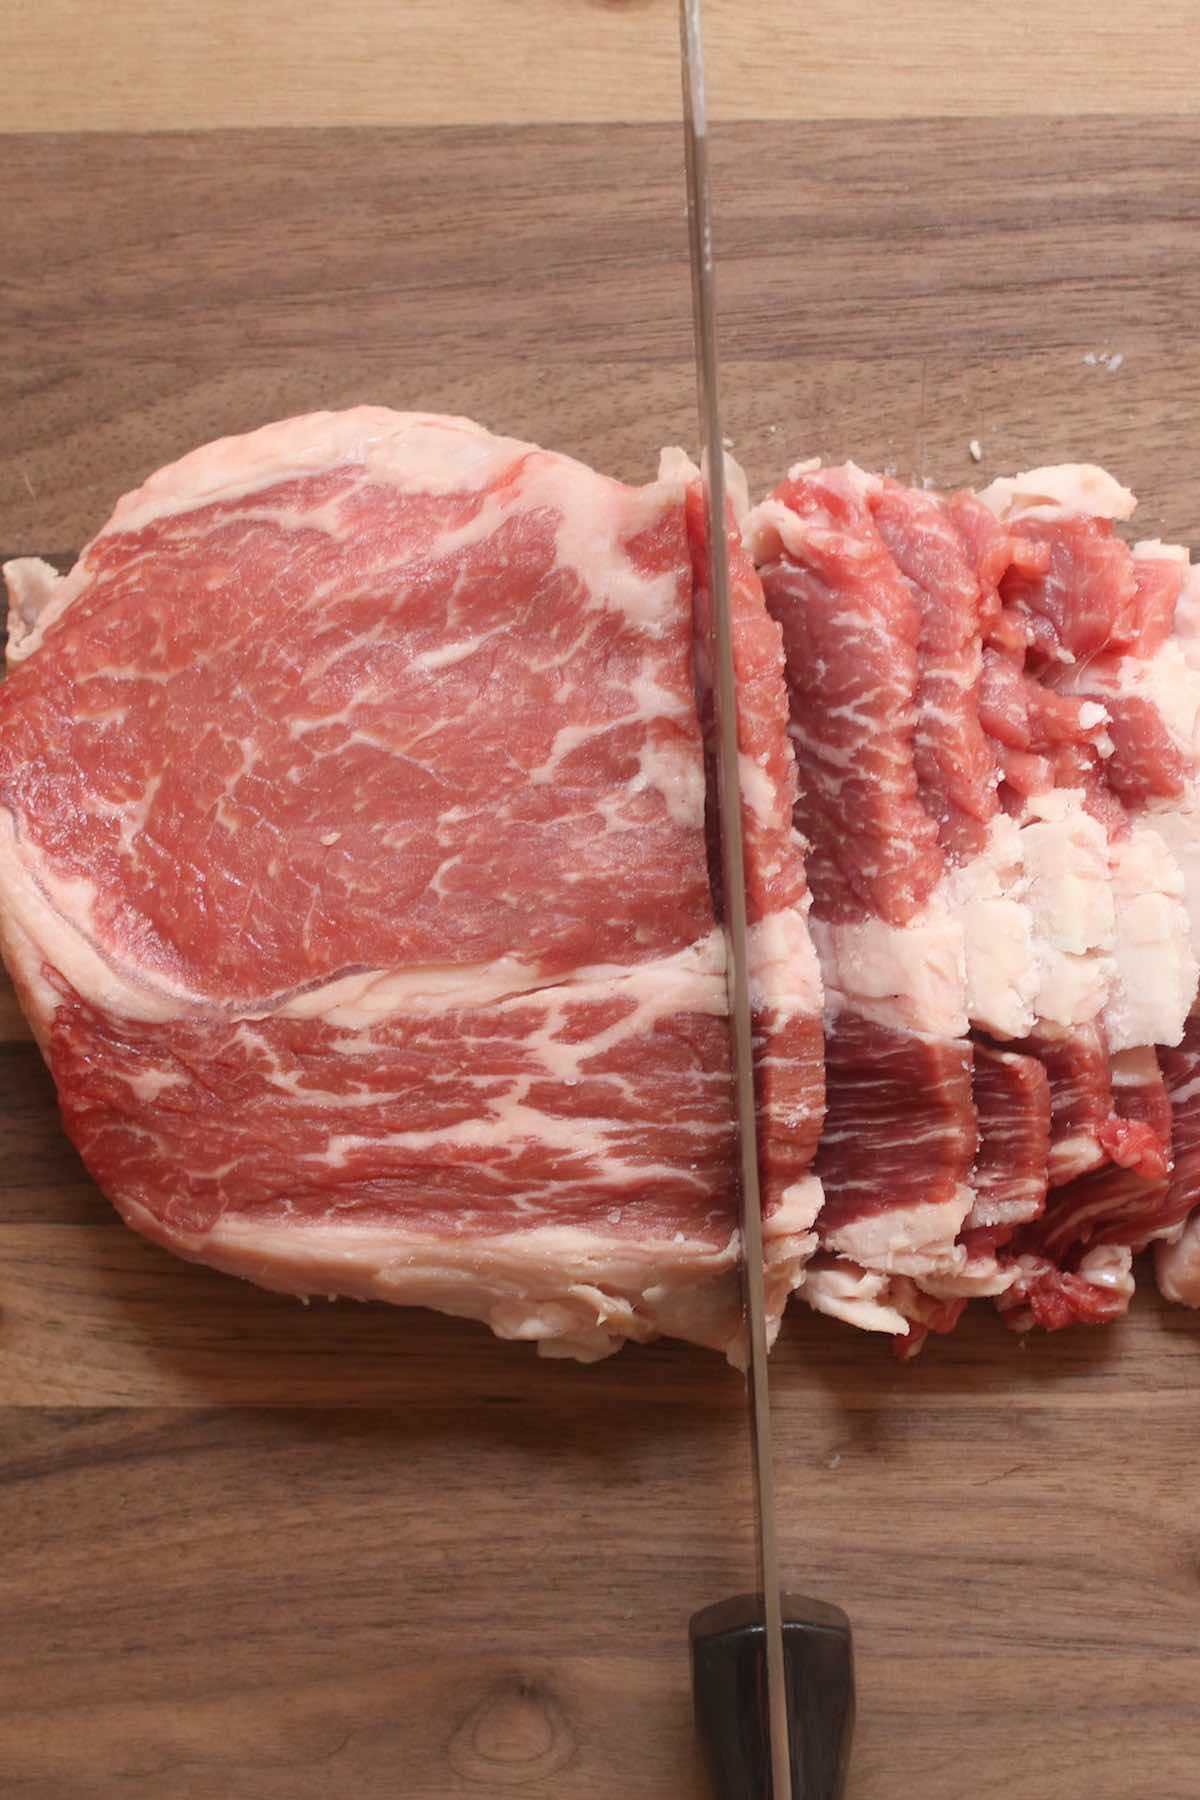 Cut the half-frozen ribeye steak on a cutting board